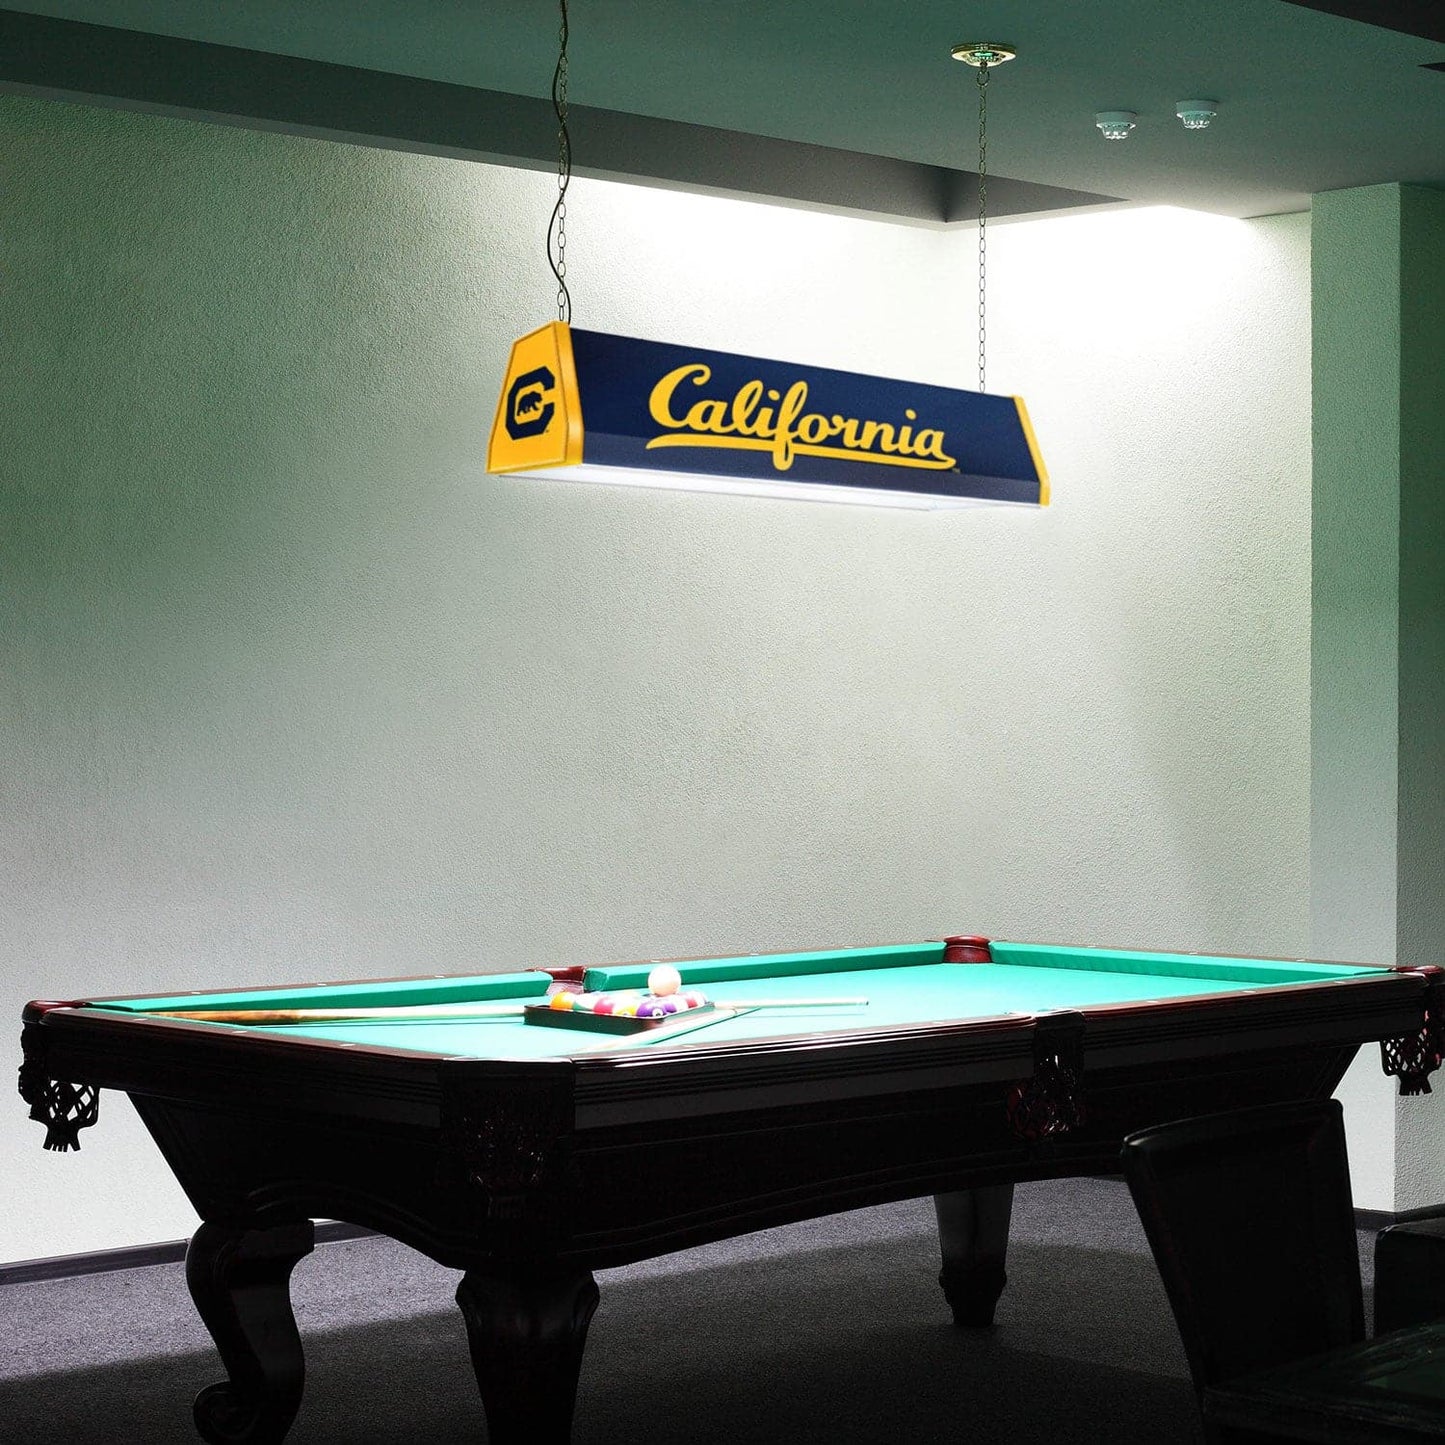 Cal Bears: Standard Pool Table Light - The Fan-Brand